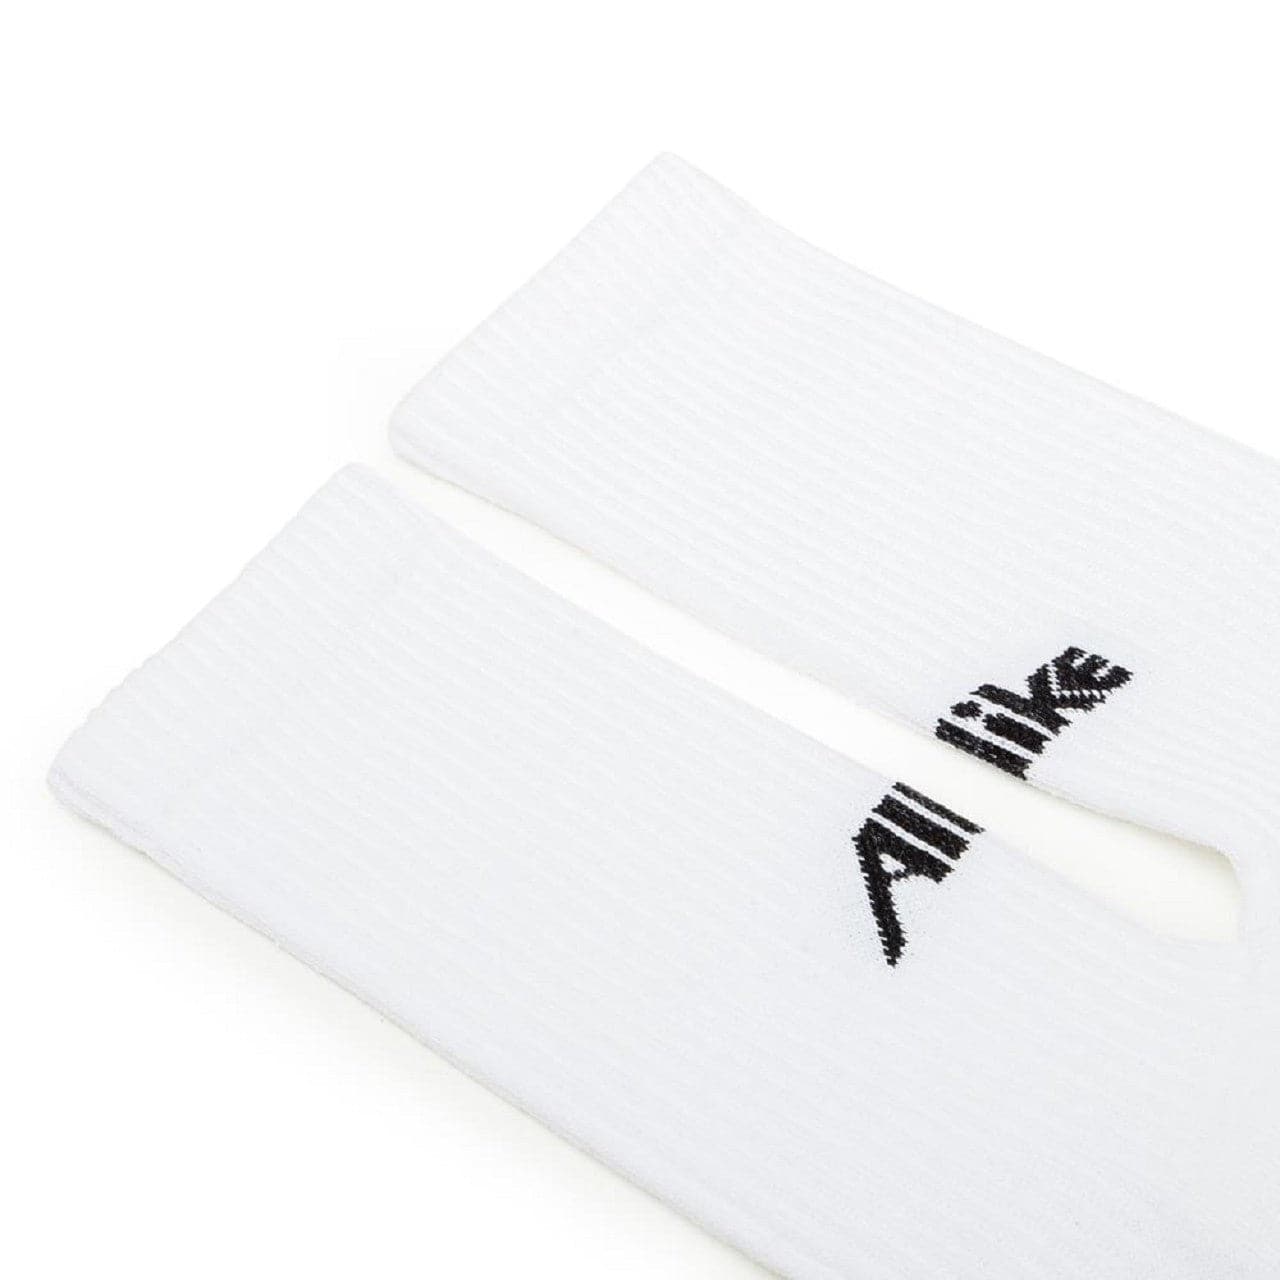 Allike Tennis Socks 2-Pack (Weiß / Schwarz)  - Allike Store